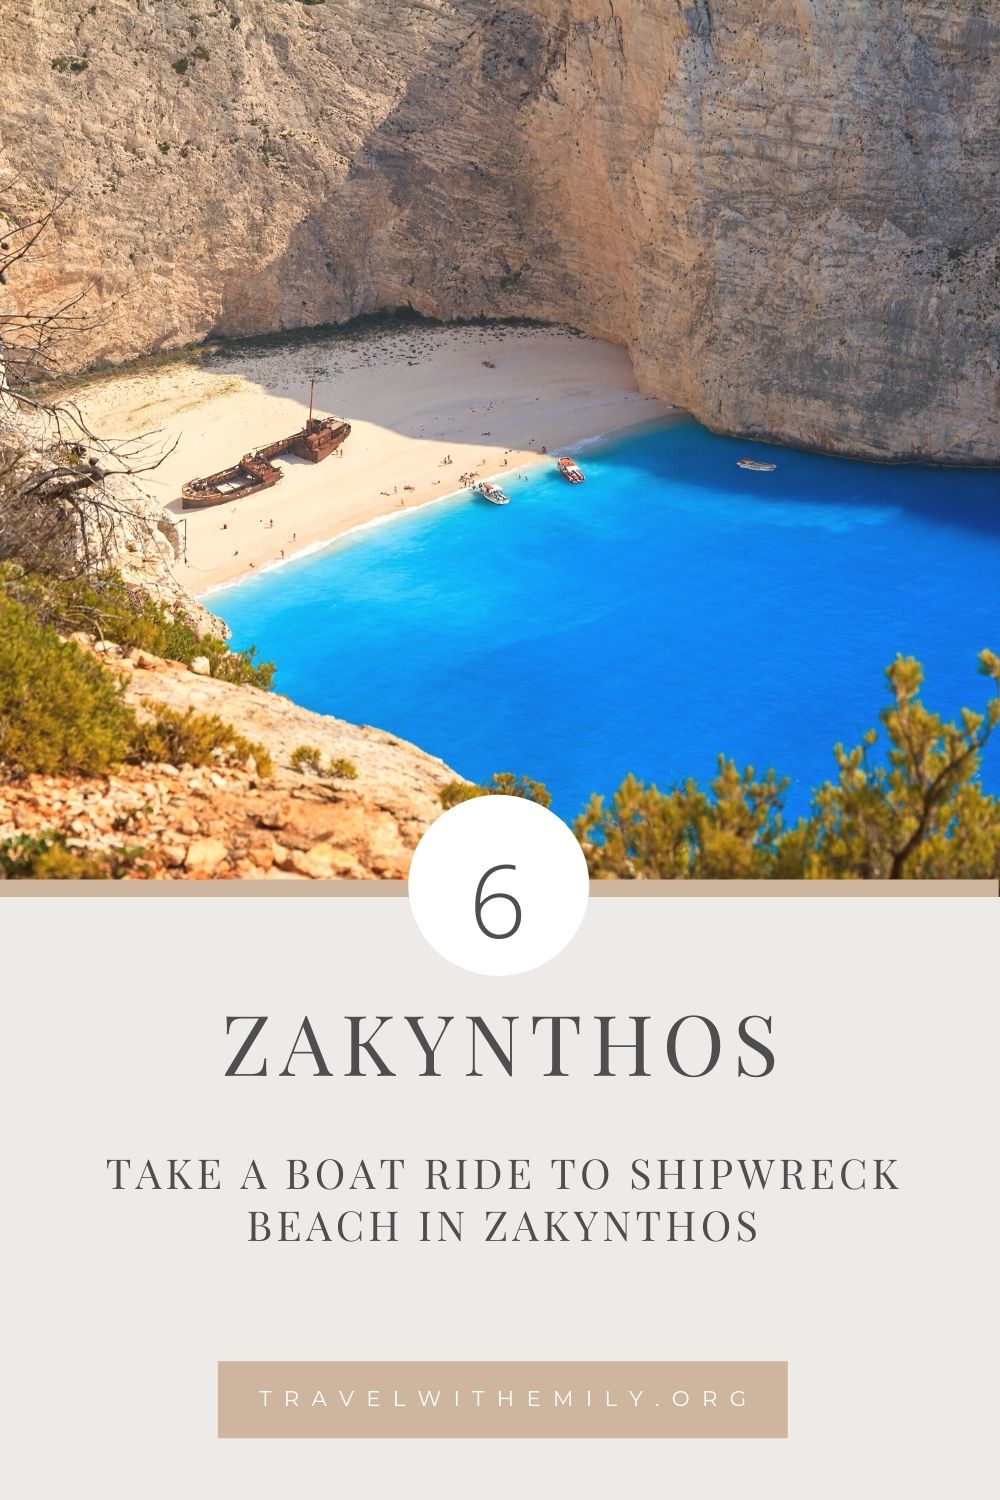 luxury beach holiday - Zakynthos